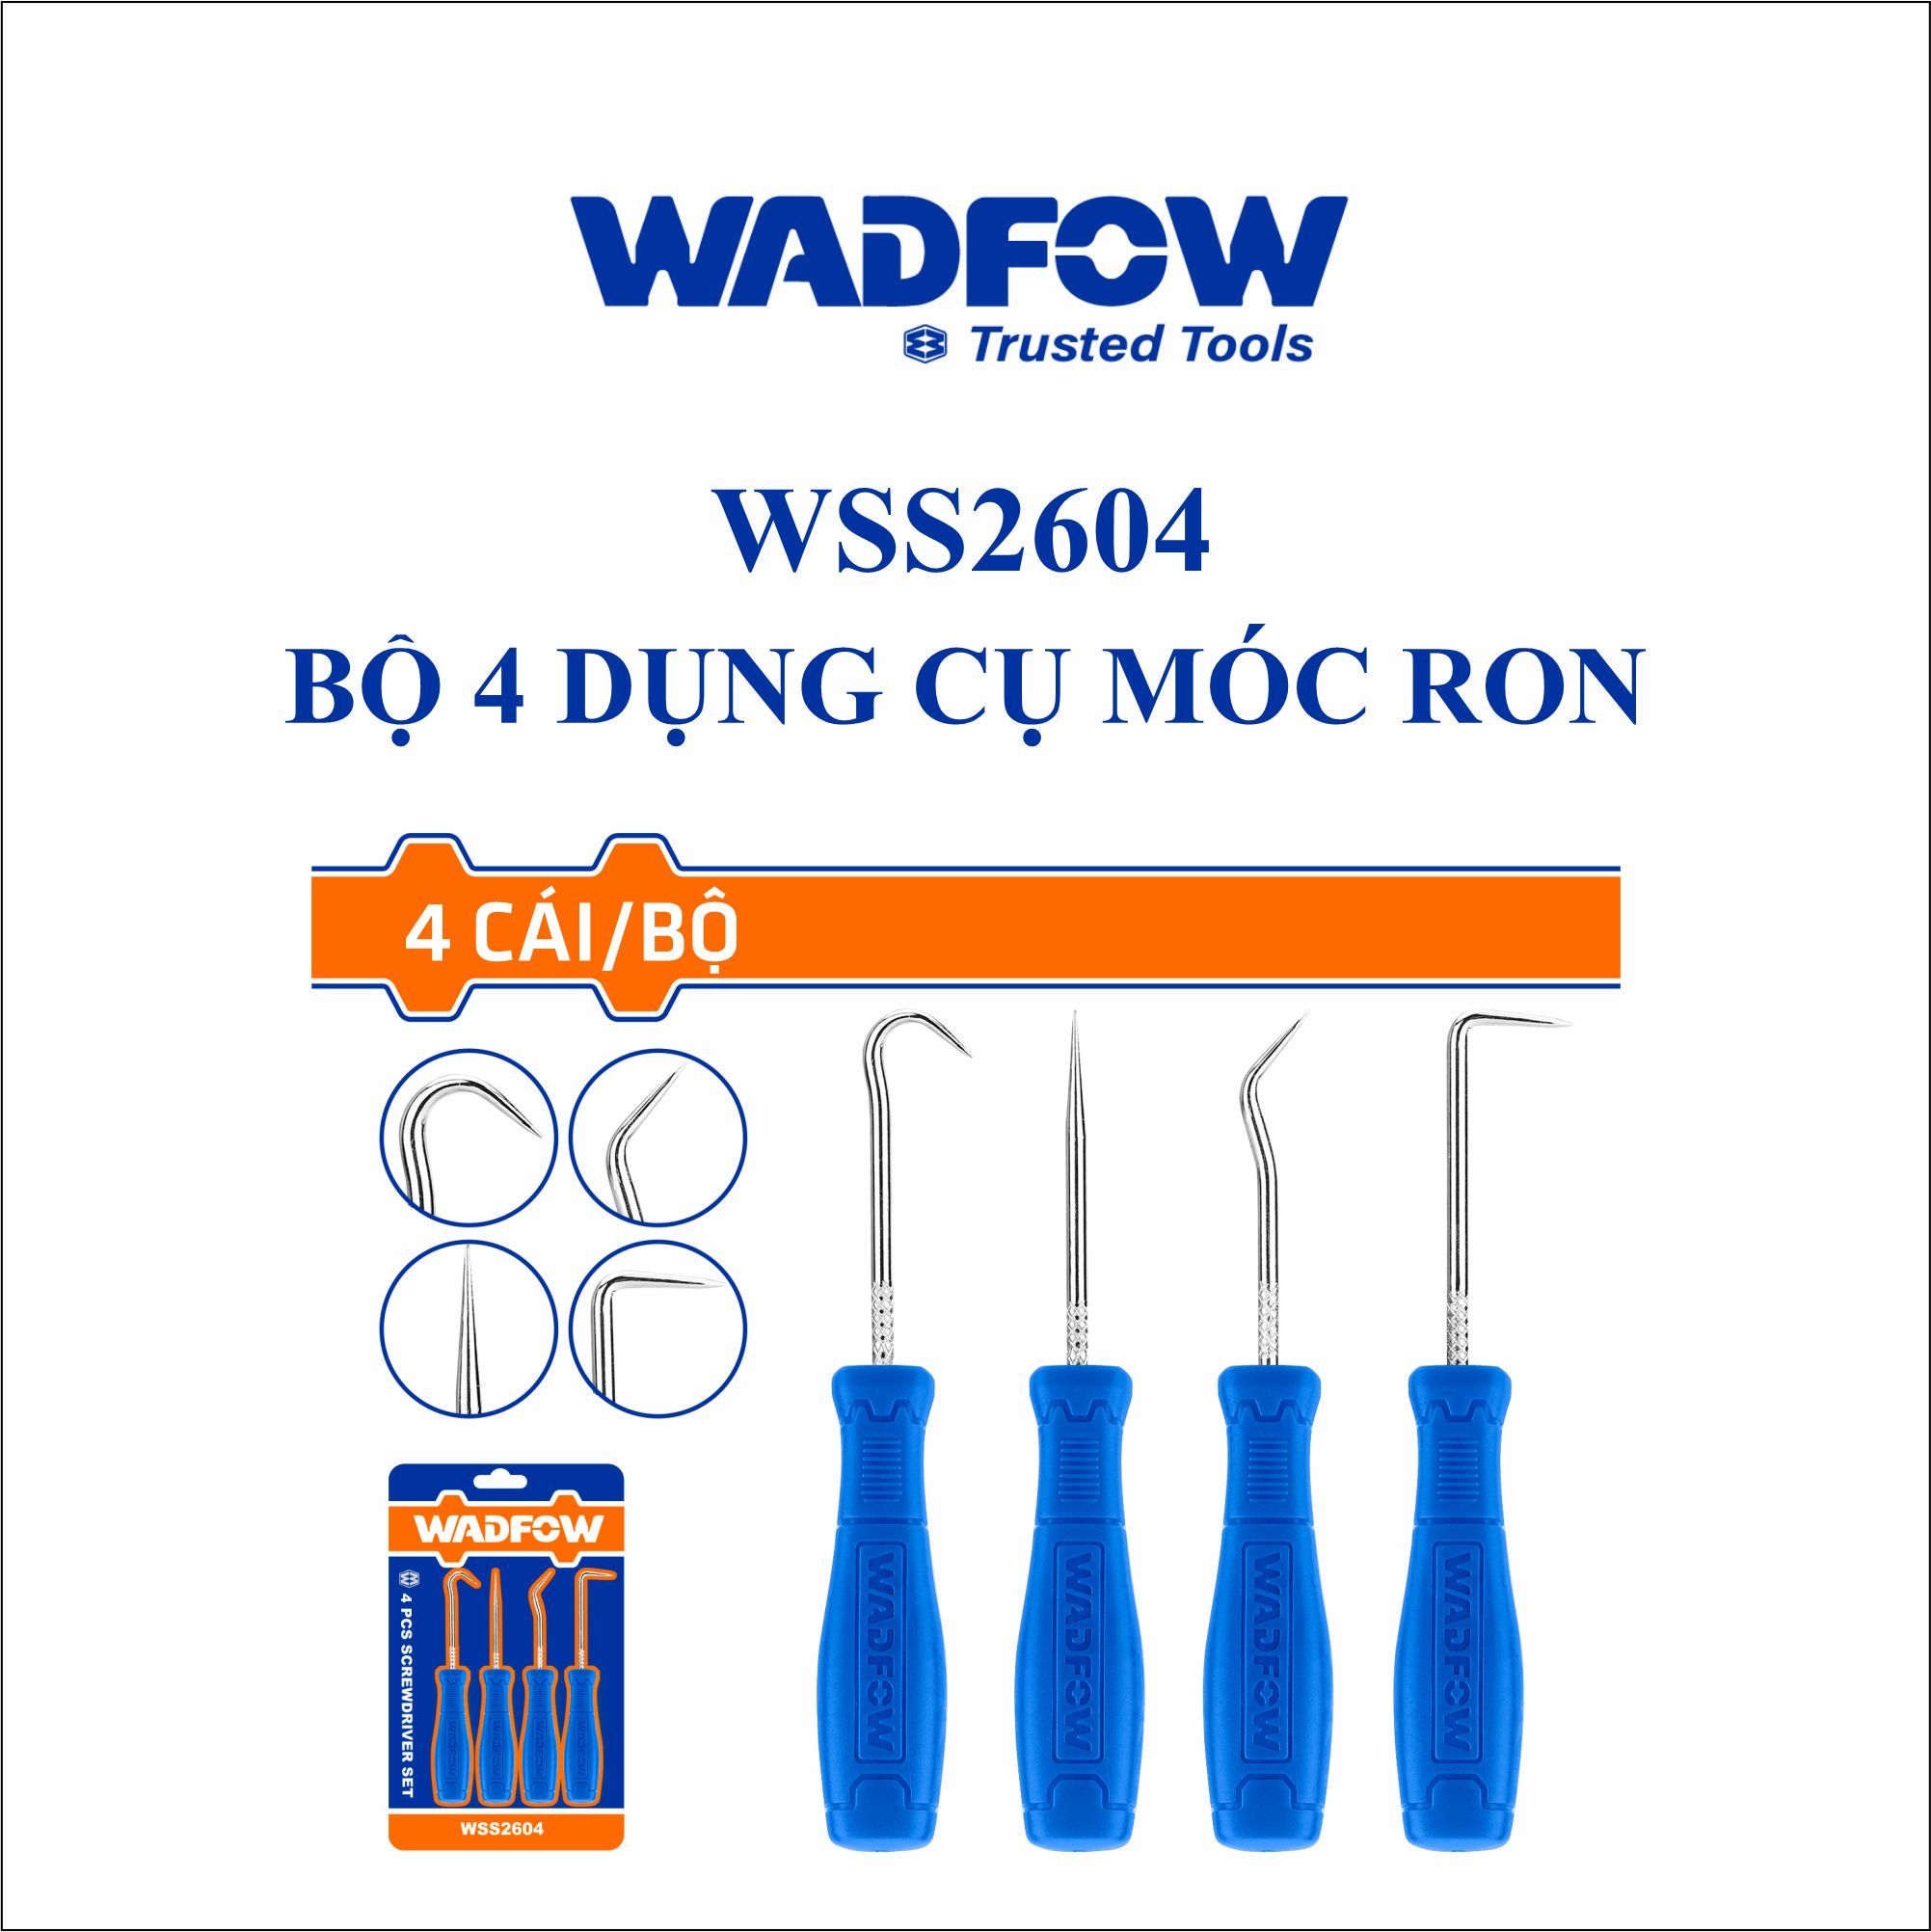  Bộ 4 dụng cụ móc ron WADFOW WSS2604 